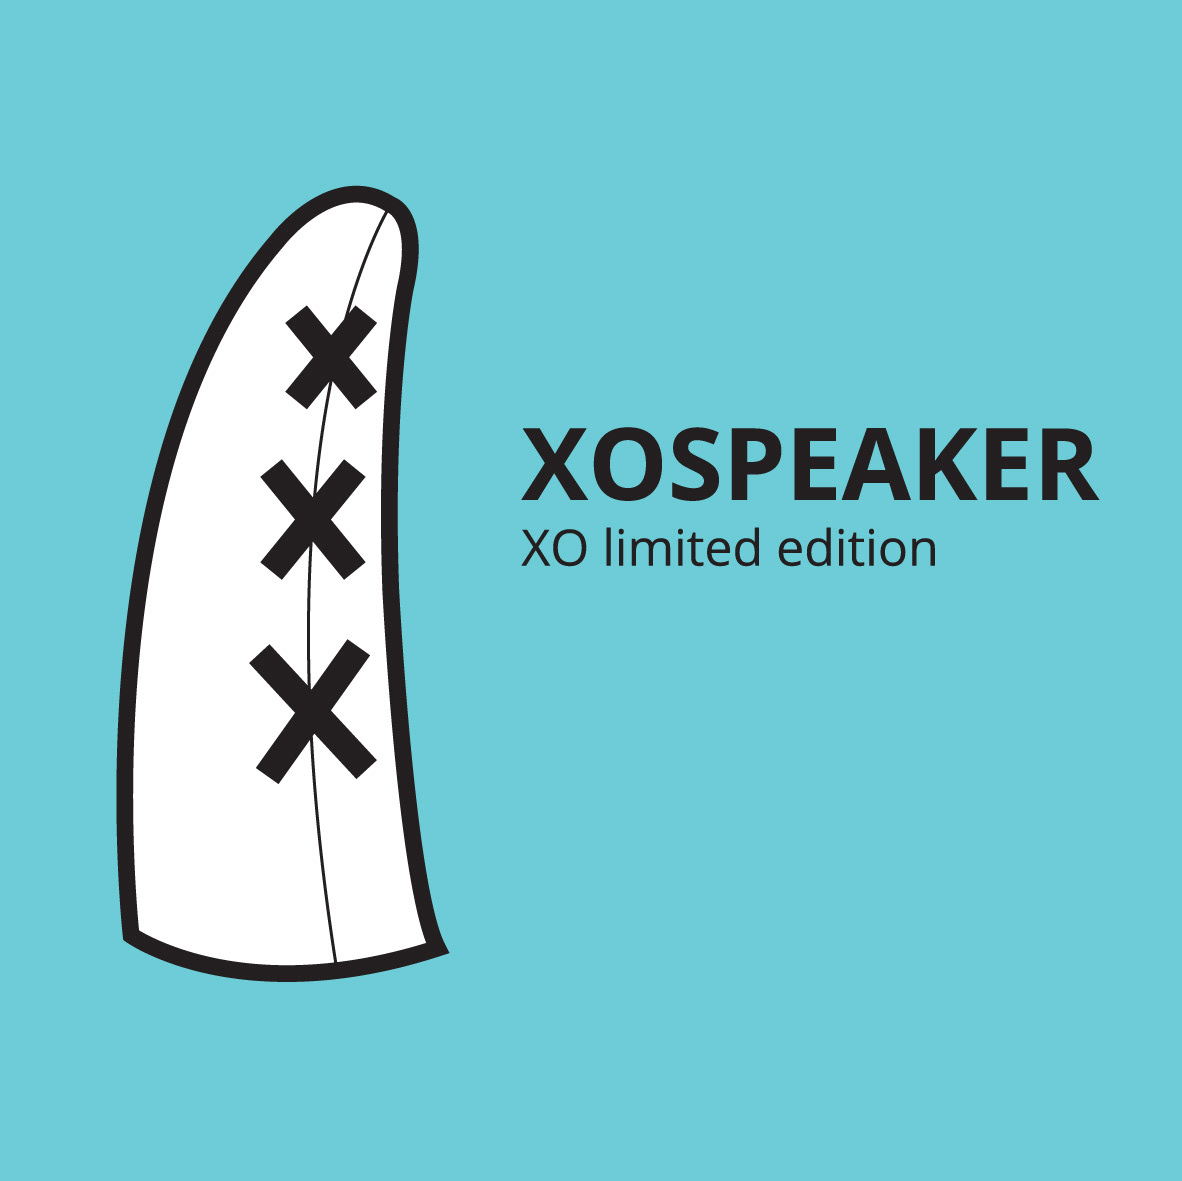 xo XOXO Love kiss brand logo logodesign Logotype brand identity xolove